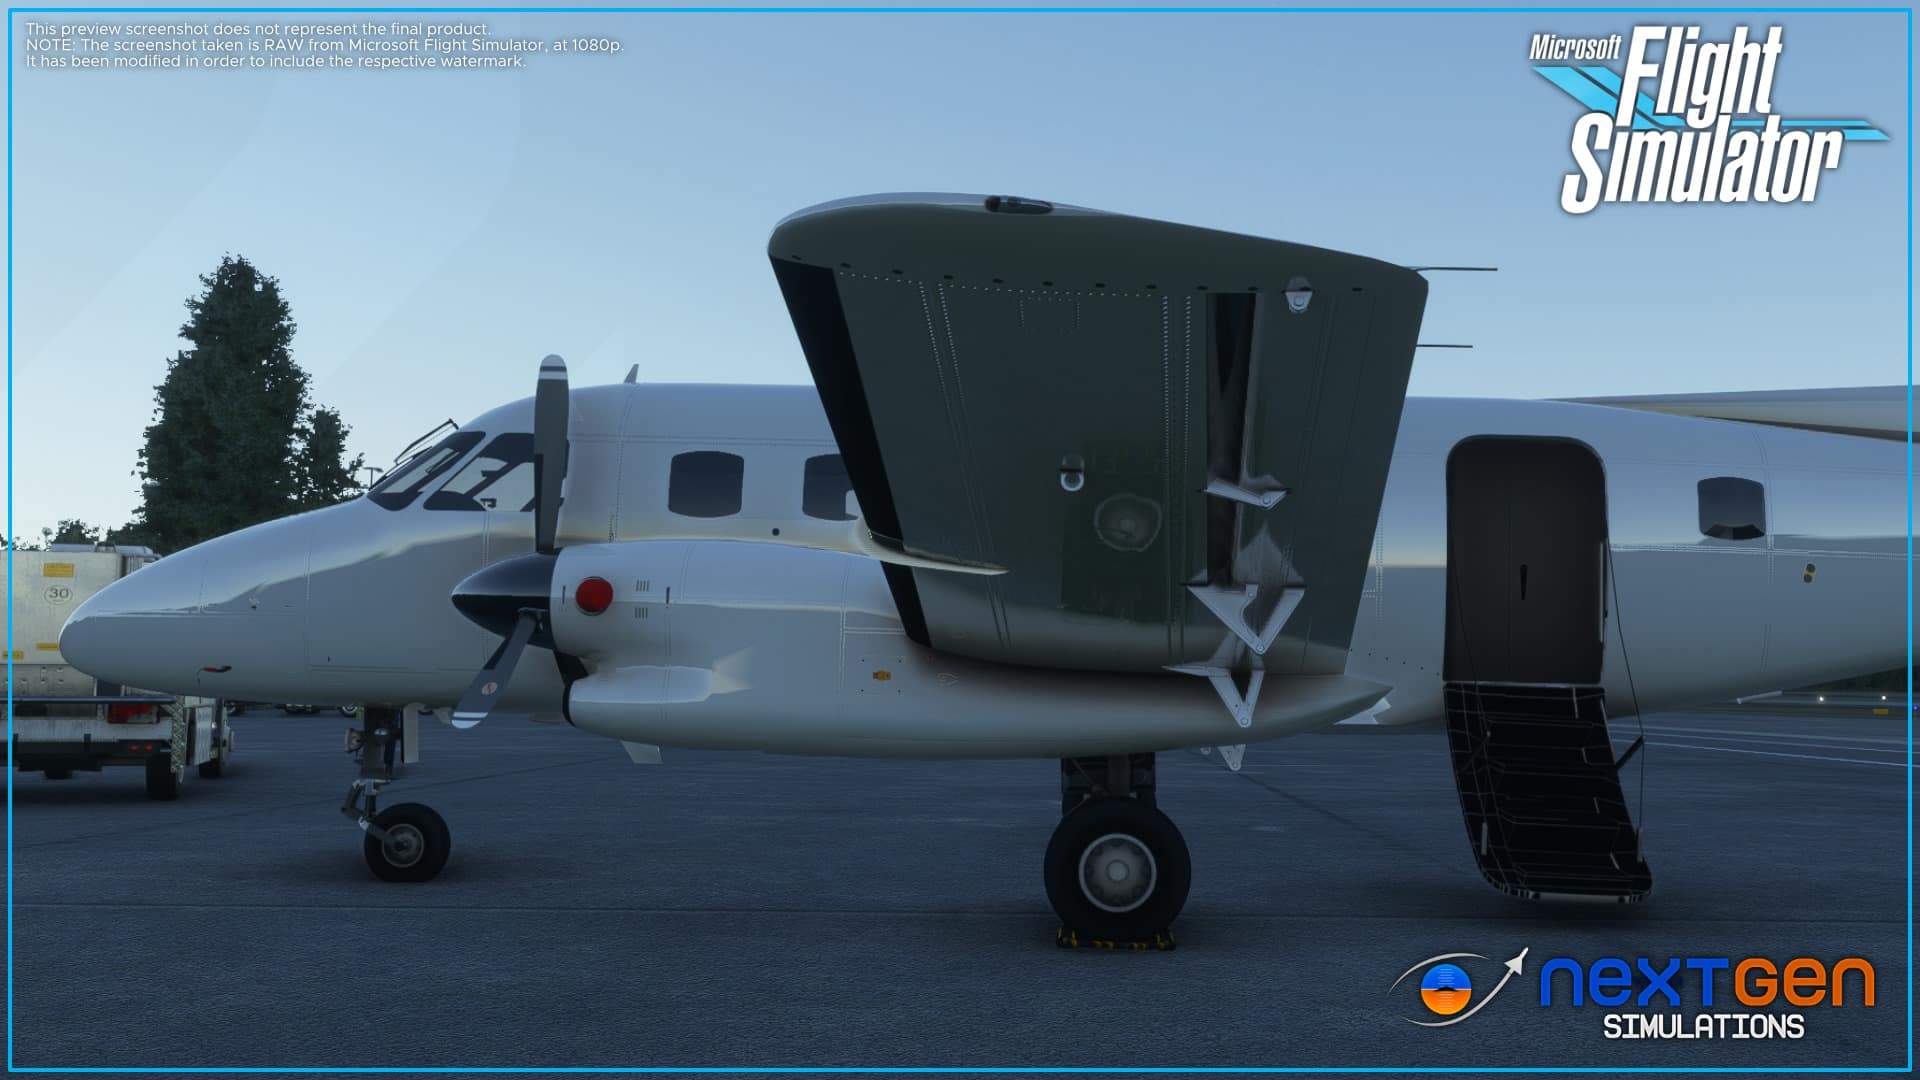 NextGen Simulations Addresses Embraer EMB 110 Development for MSFS - Microsoft Flight Simulator, NextGen Sim